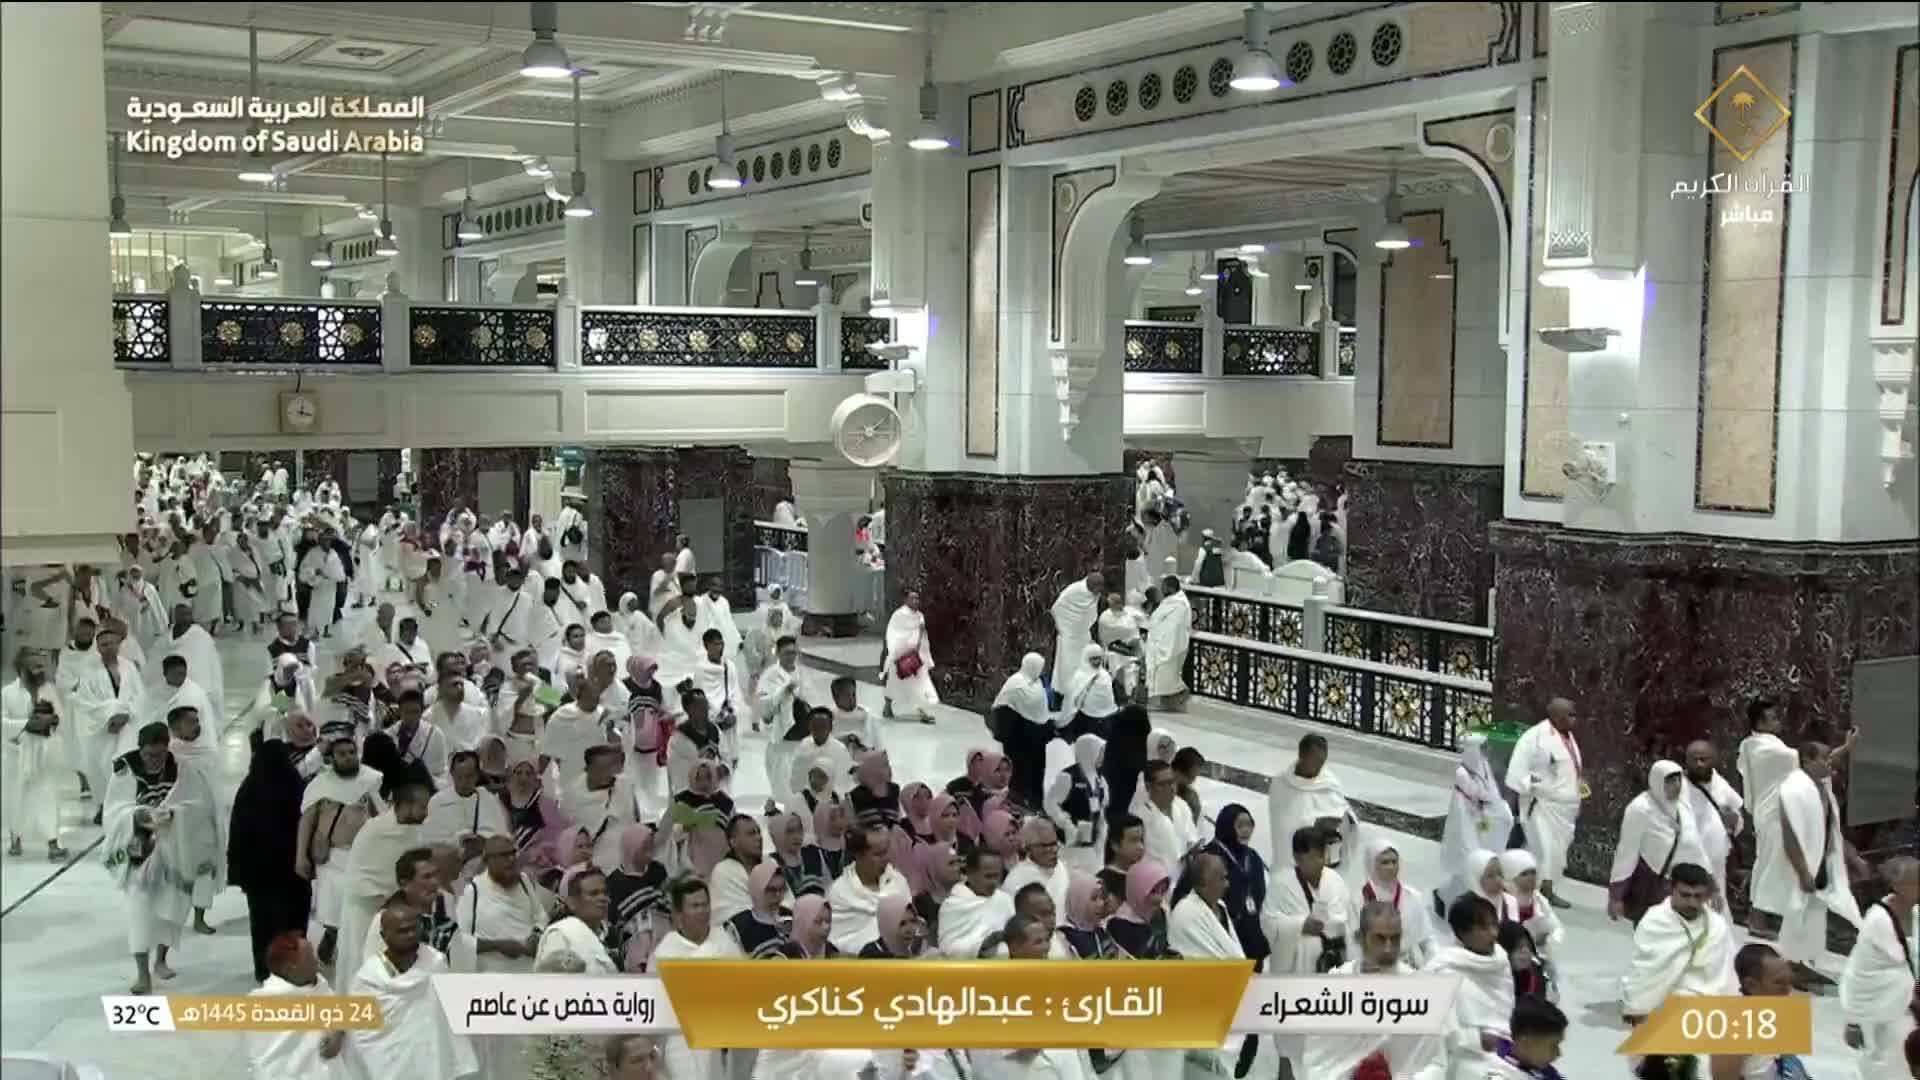 La Mecca Mer. 00:36